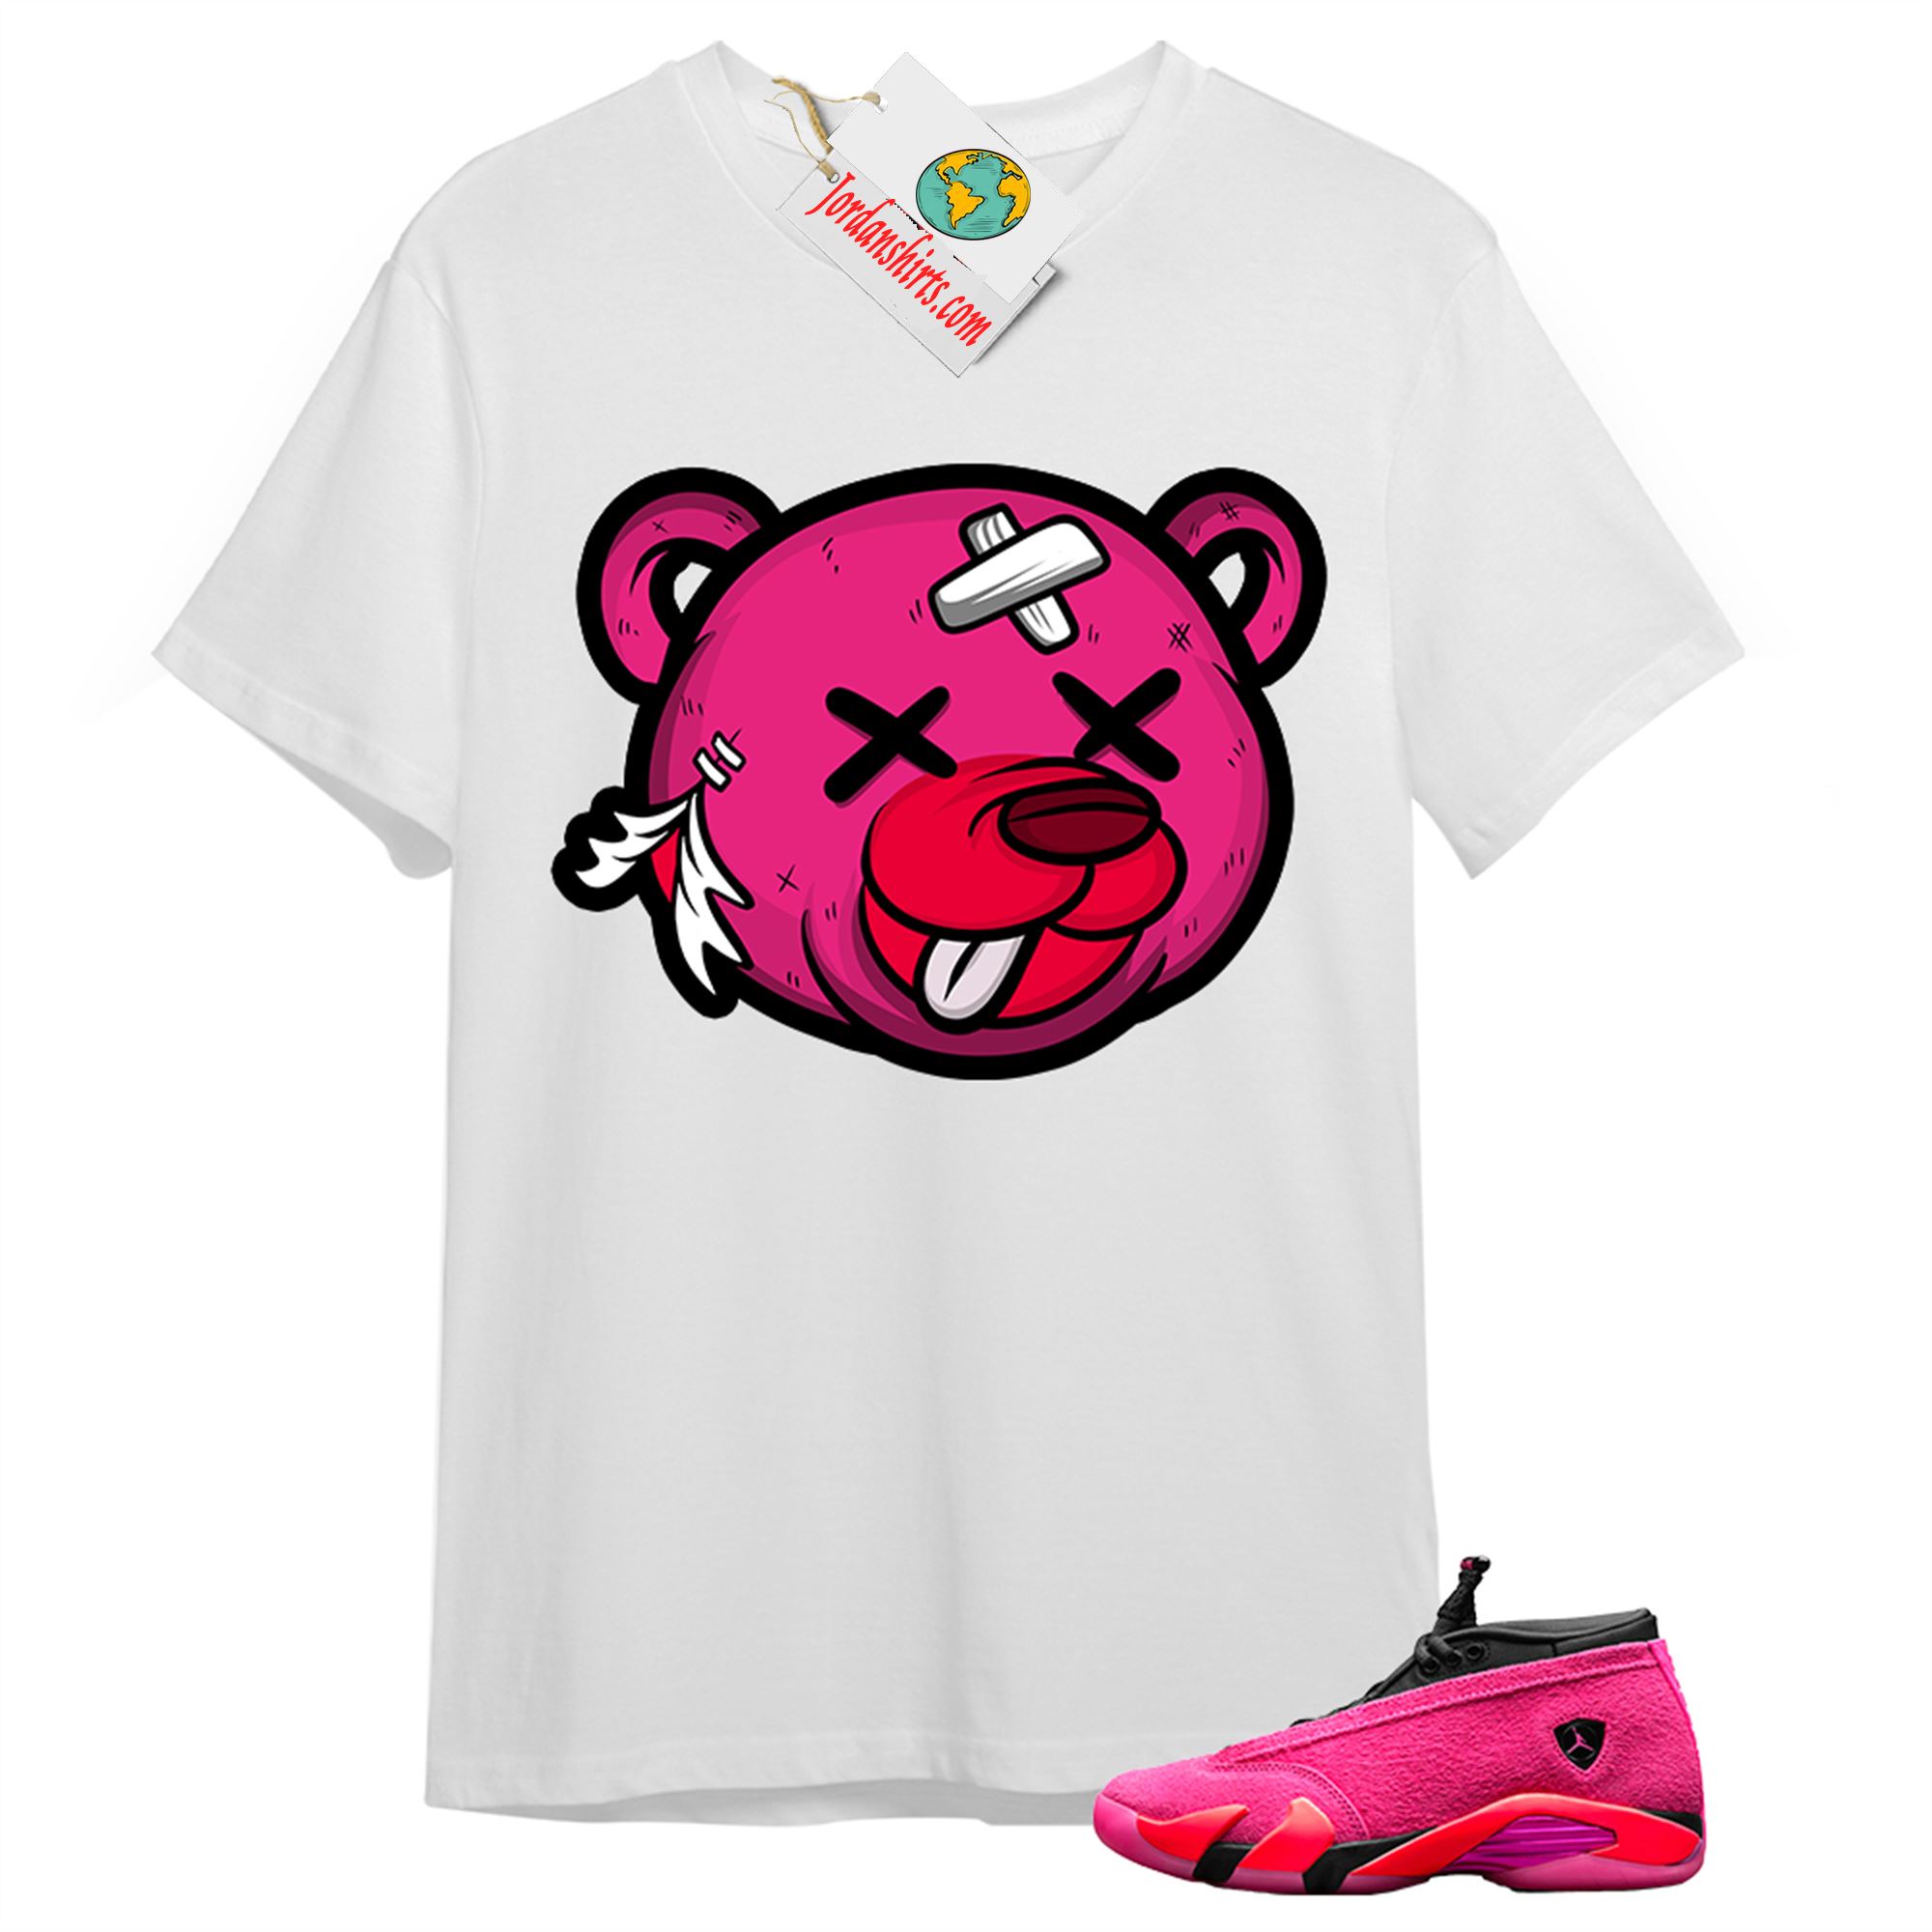 Jordan 14 Shirt, Teddy Bear Head White T-shirt Air Jordan 14 Wmns Shocking Pink 14s Full Size Up To 5xl